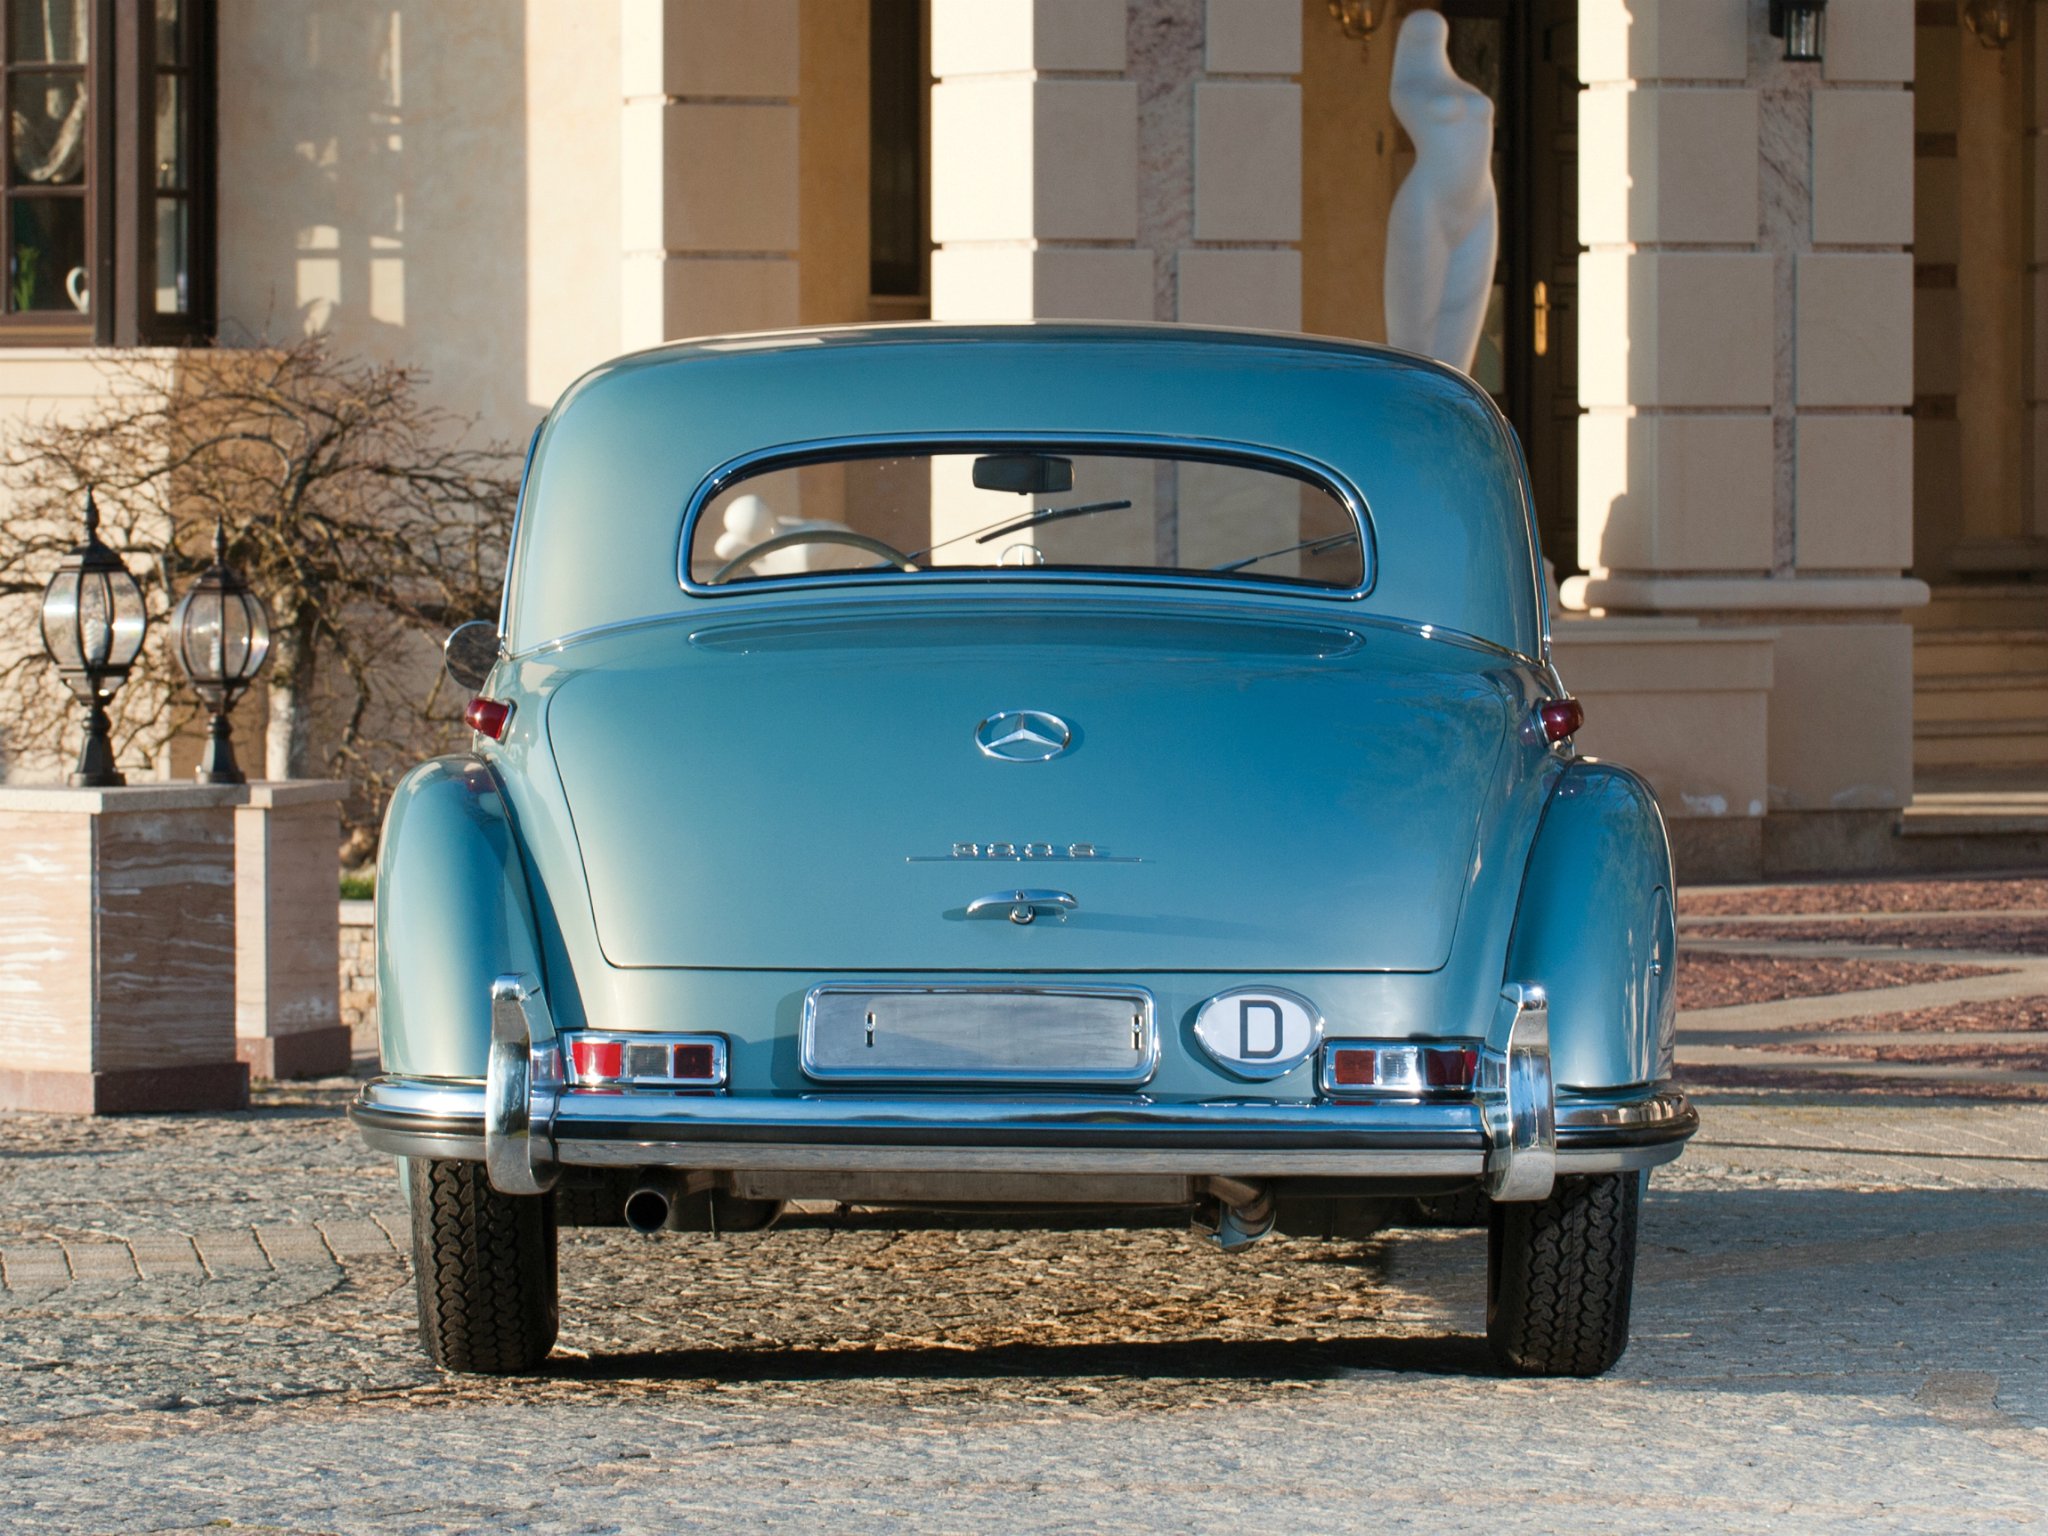 W retro. Mercedes 300 1951. Mercedes Benz s300. 1951-56 Mercedes-Benz 300 s Coupe (w188) _. Мерседес 300 55 года.